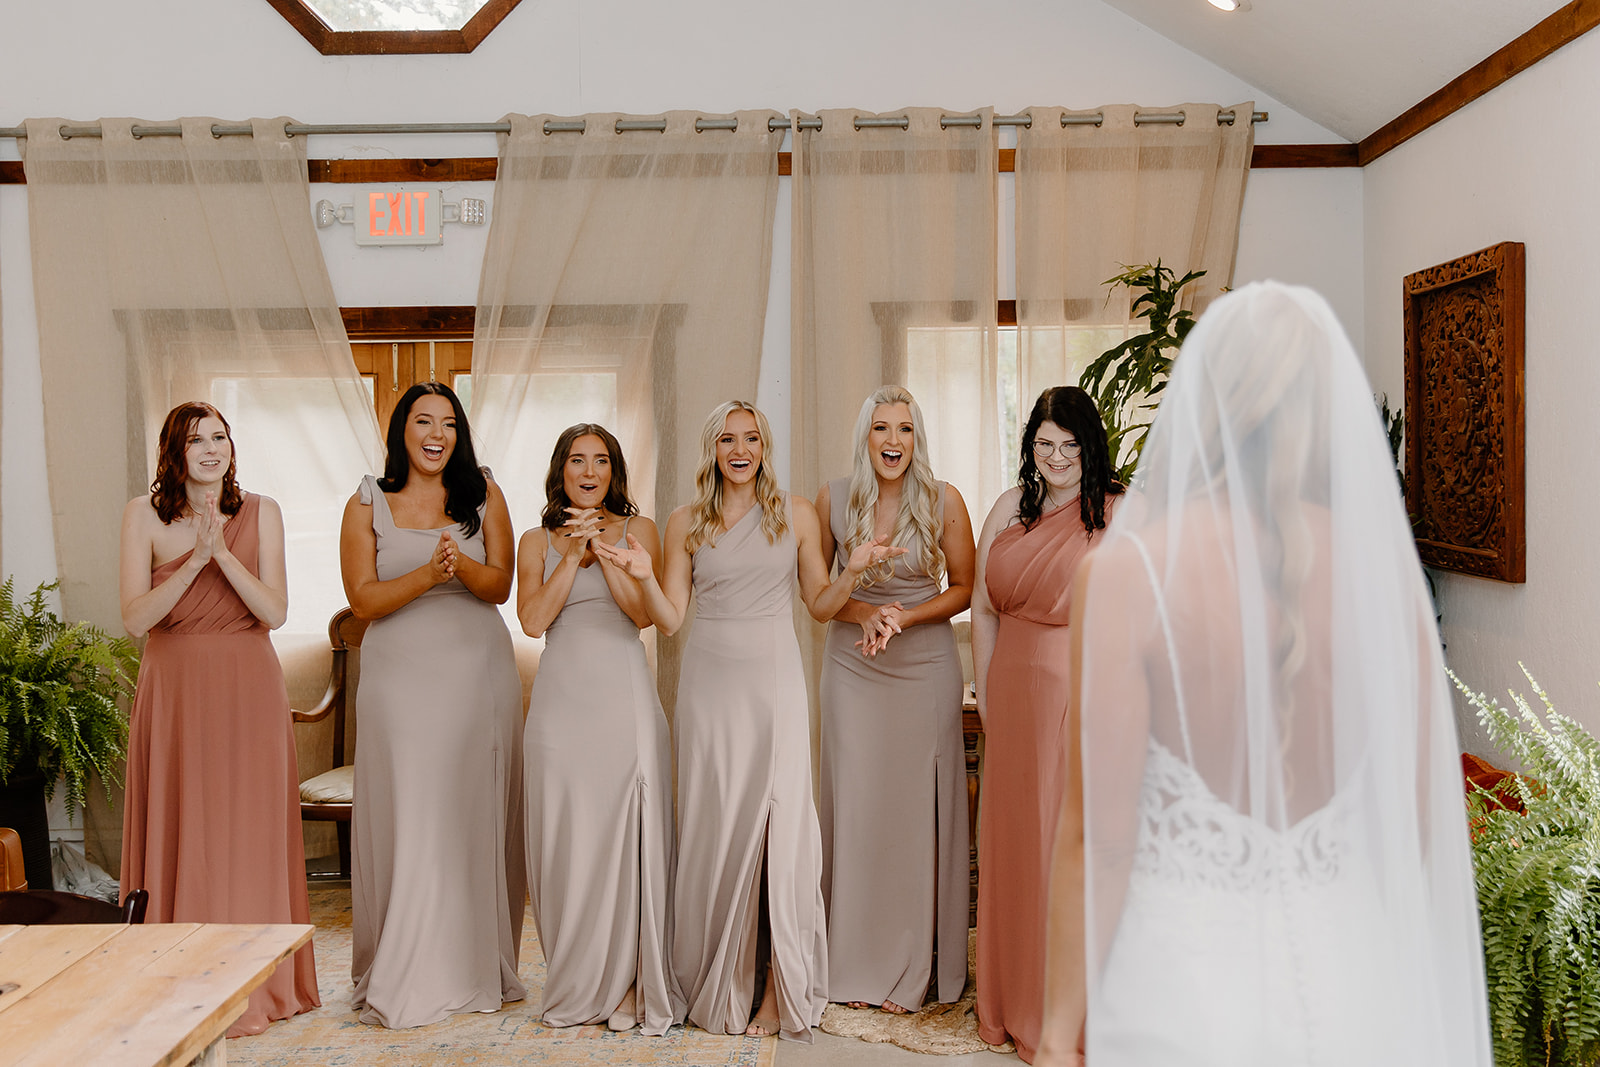 Bridesmaids react to seeing their friend as a bride